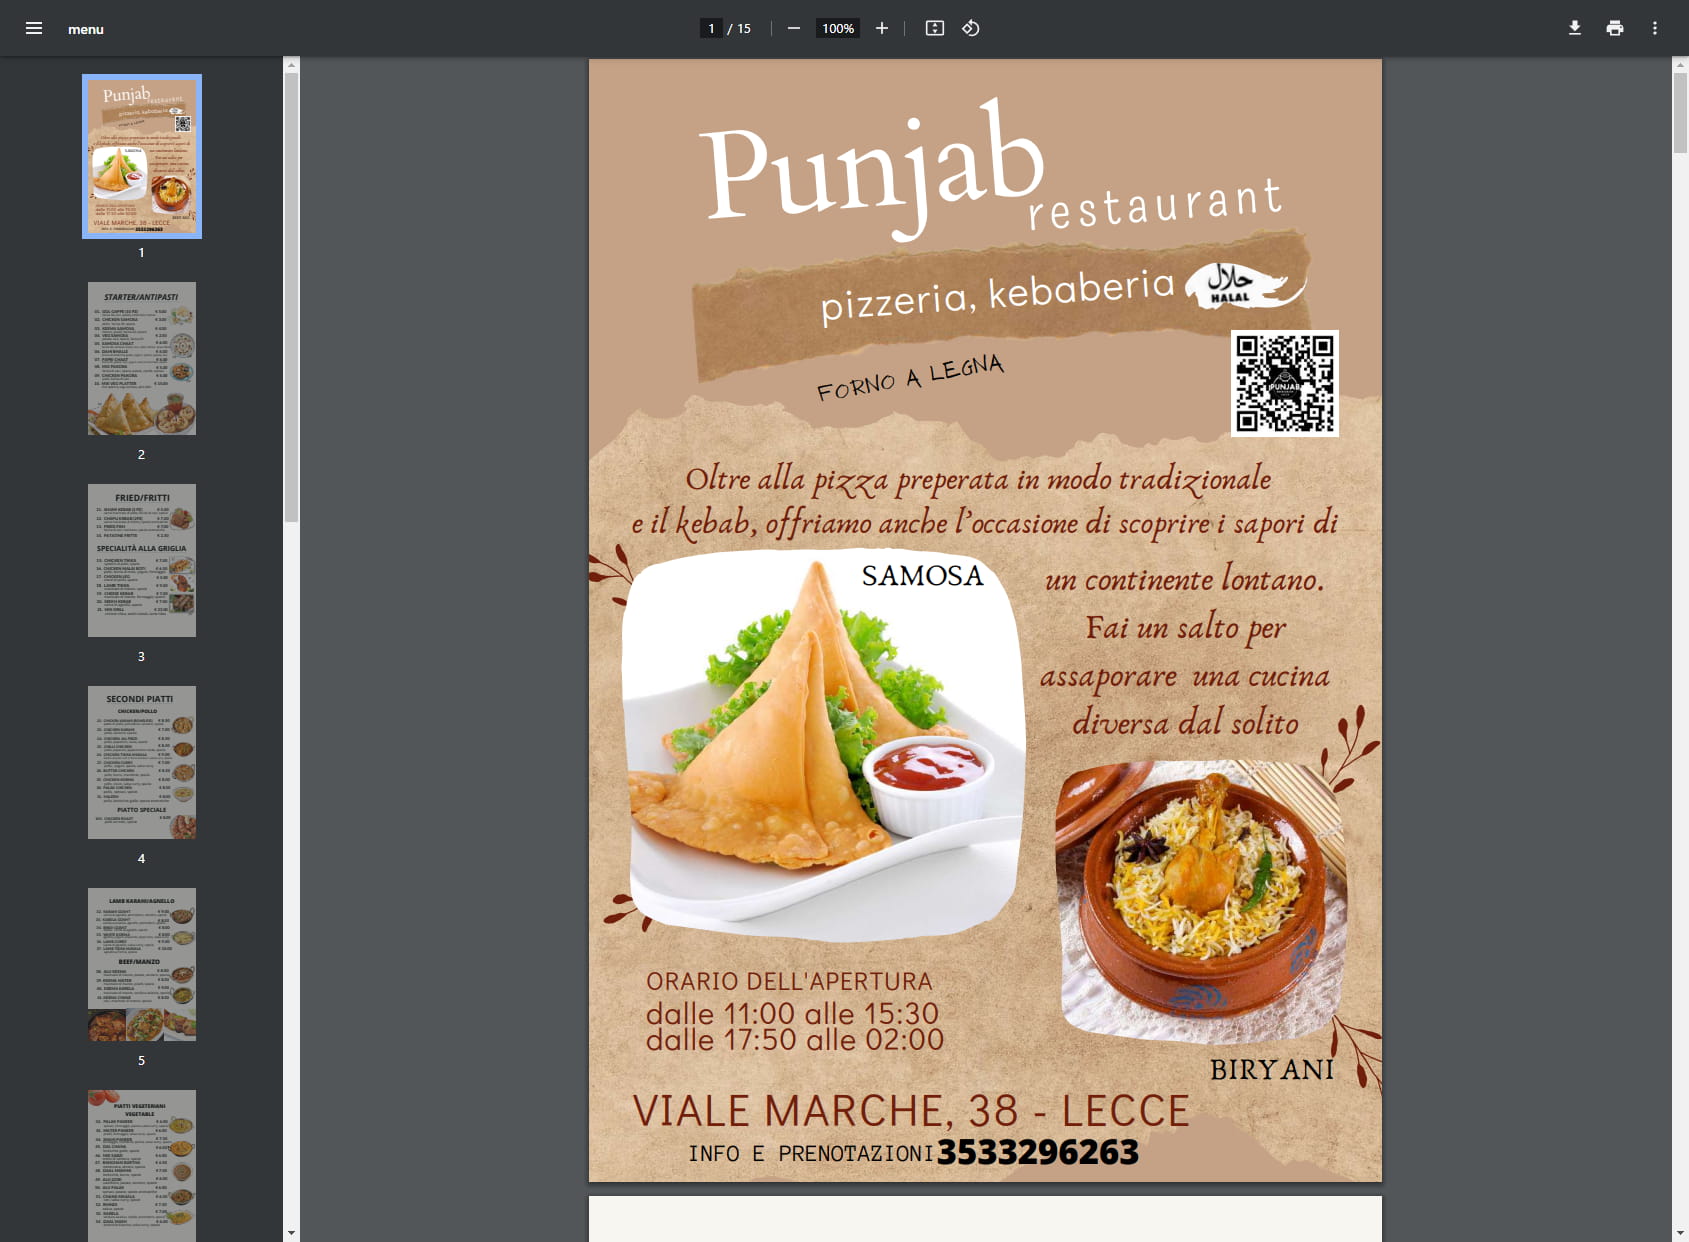 Punjab restaurant